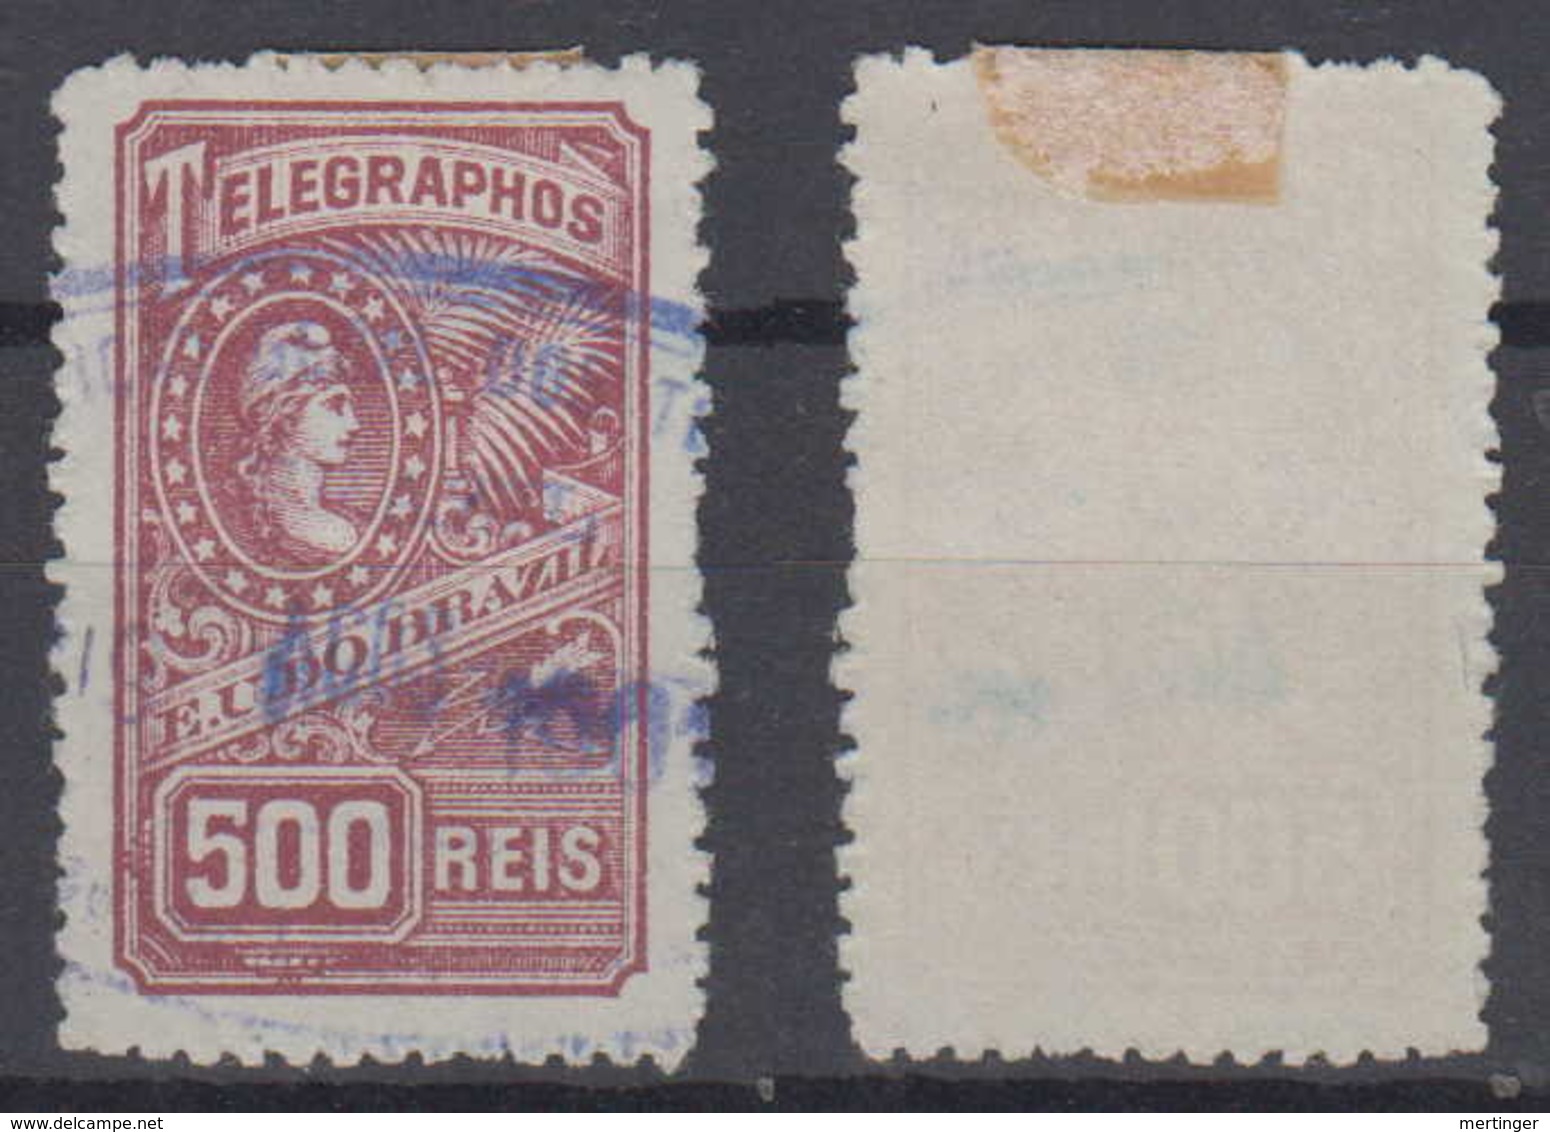 Brazil Brasil Telegrafo Telegraph 1899 500R Used - Telégrafo